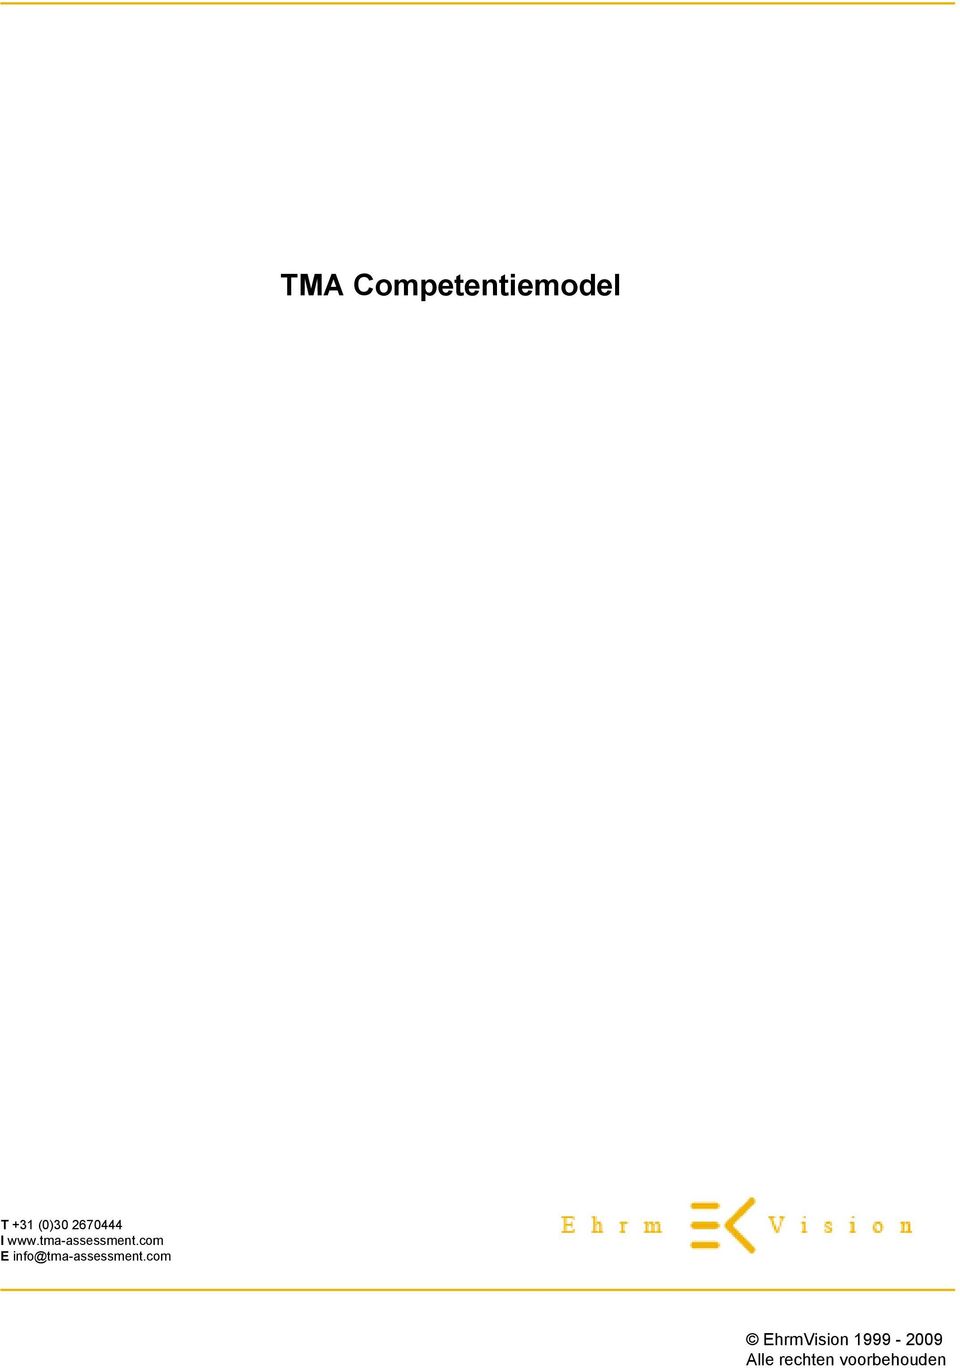 www.tma-assessment.